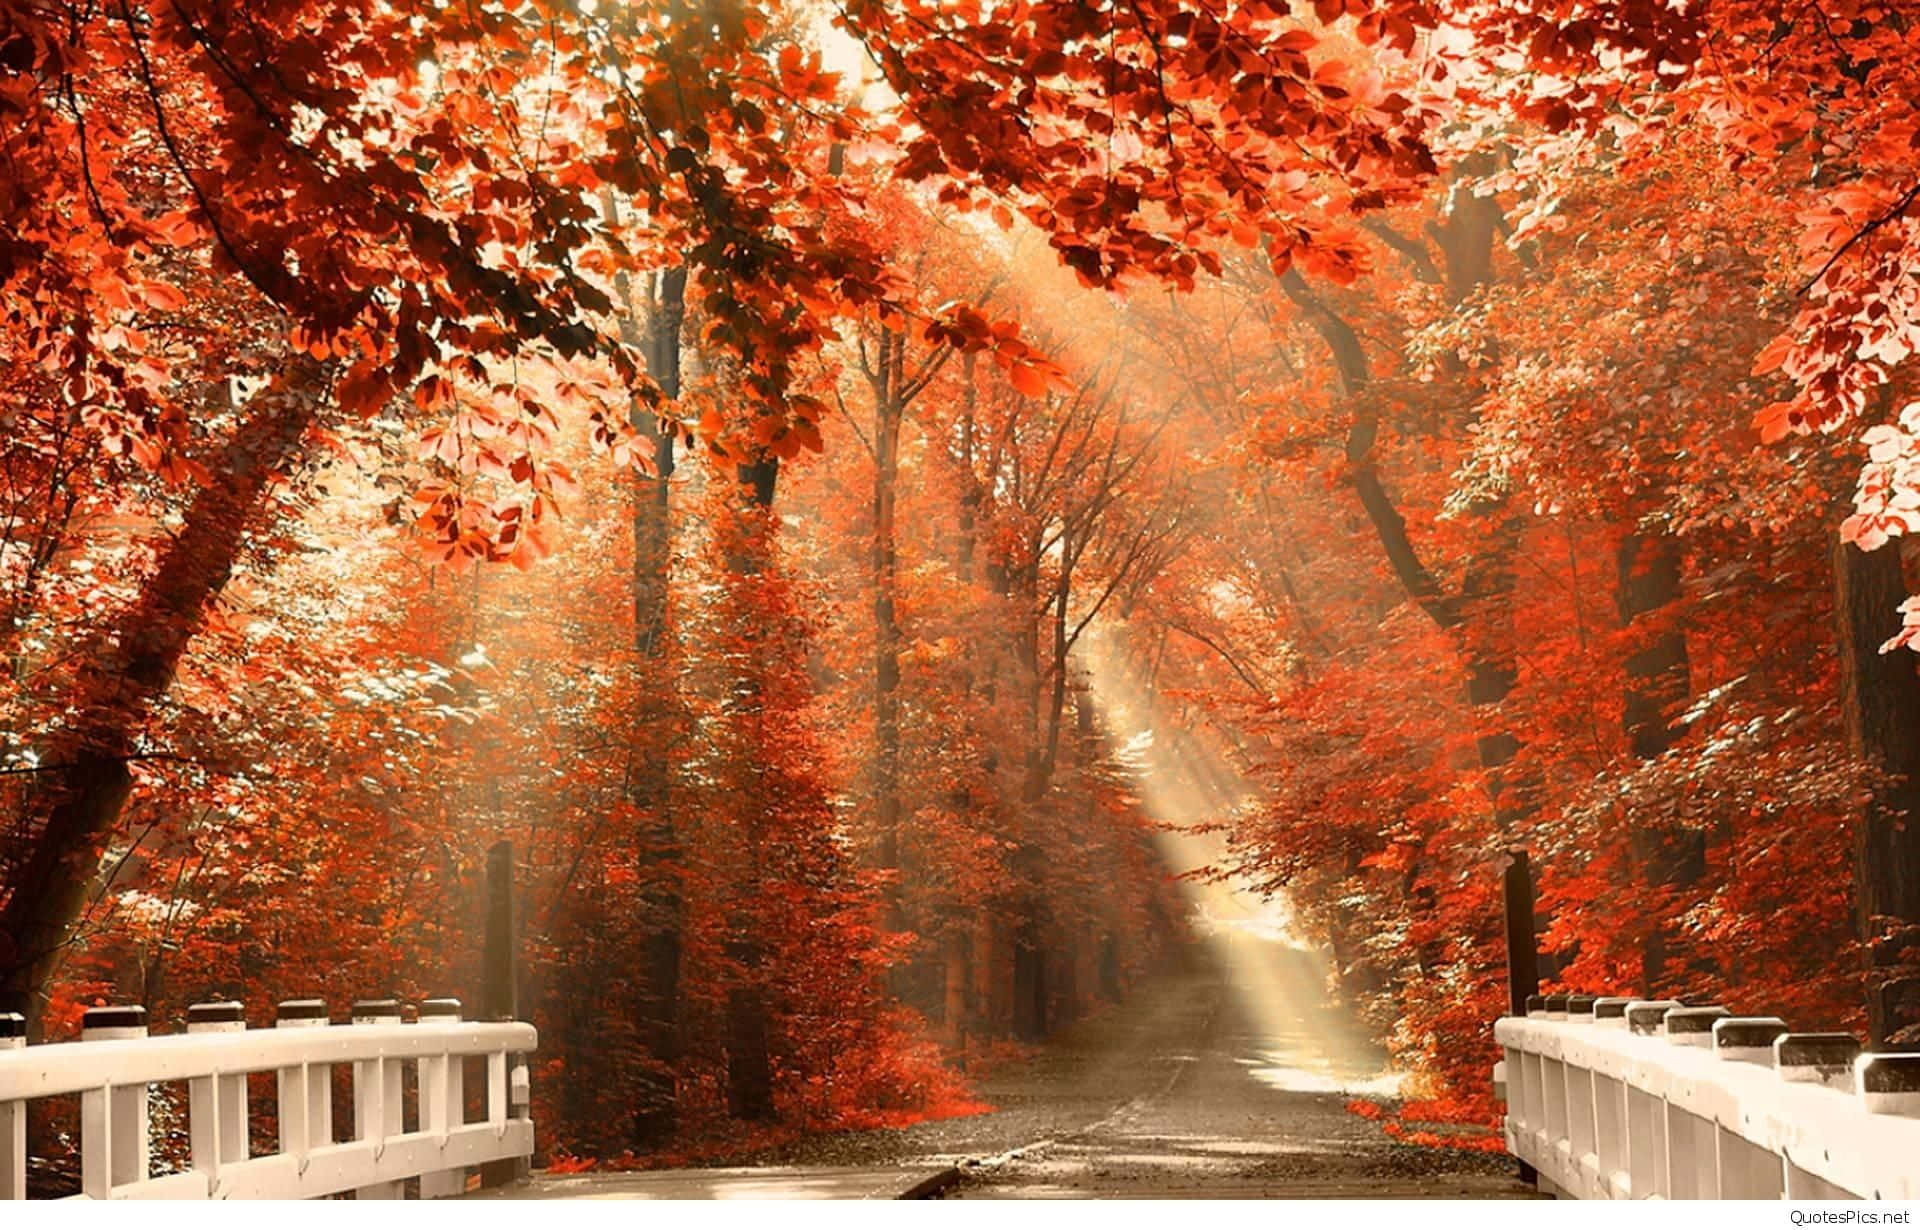 Autumn Season Aesthetic Forest View With Bridge Background